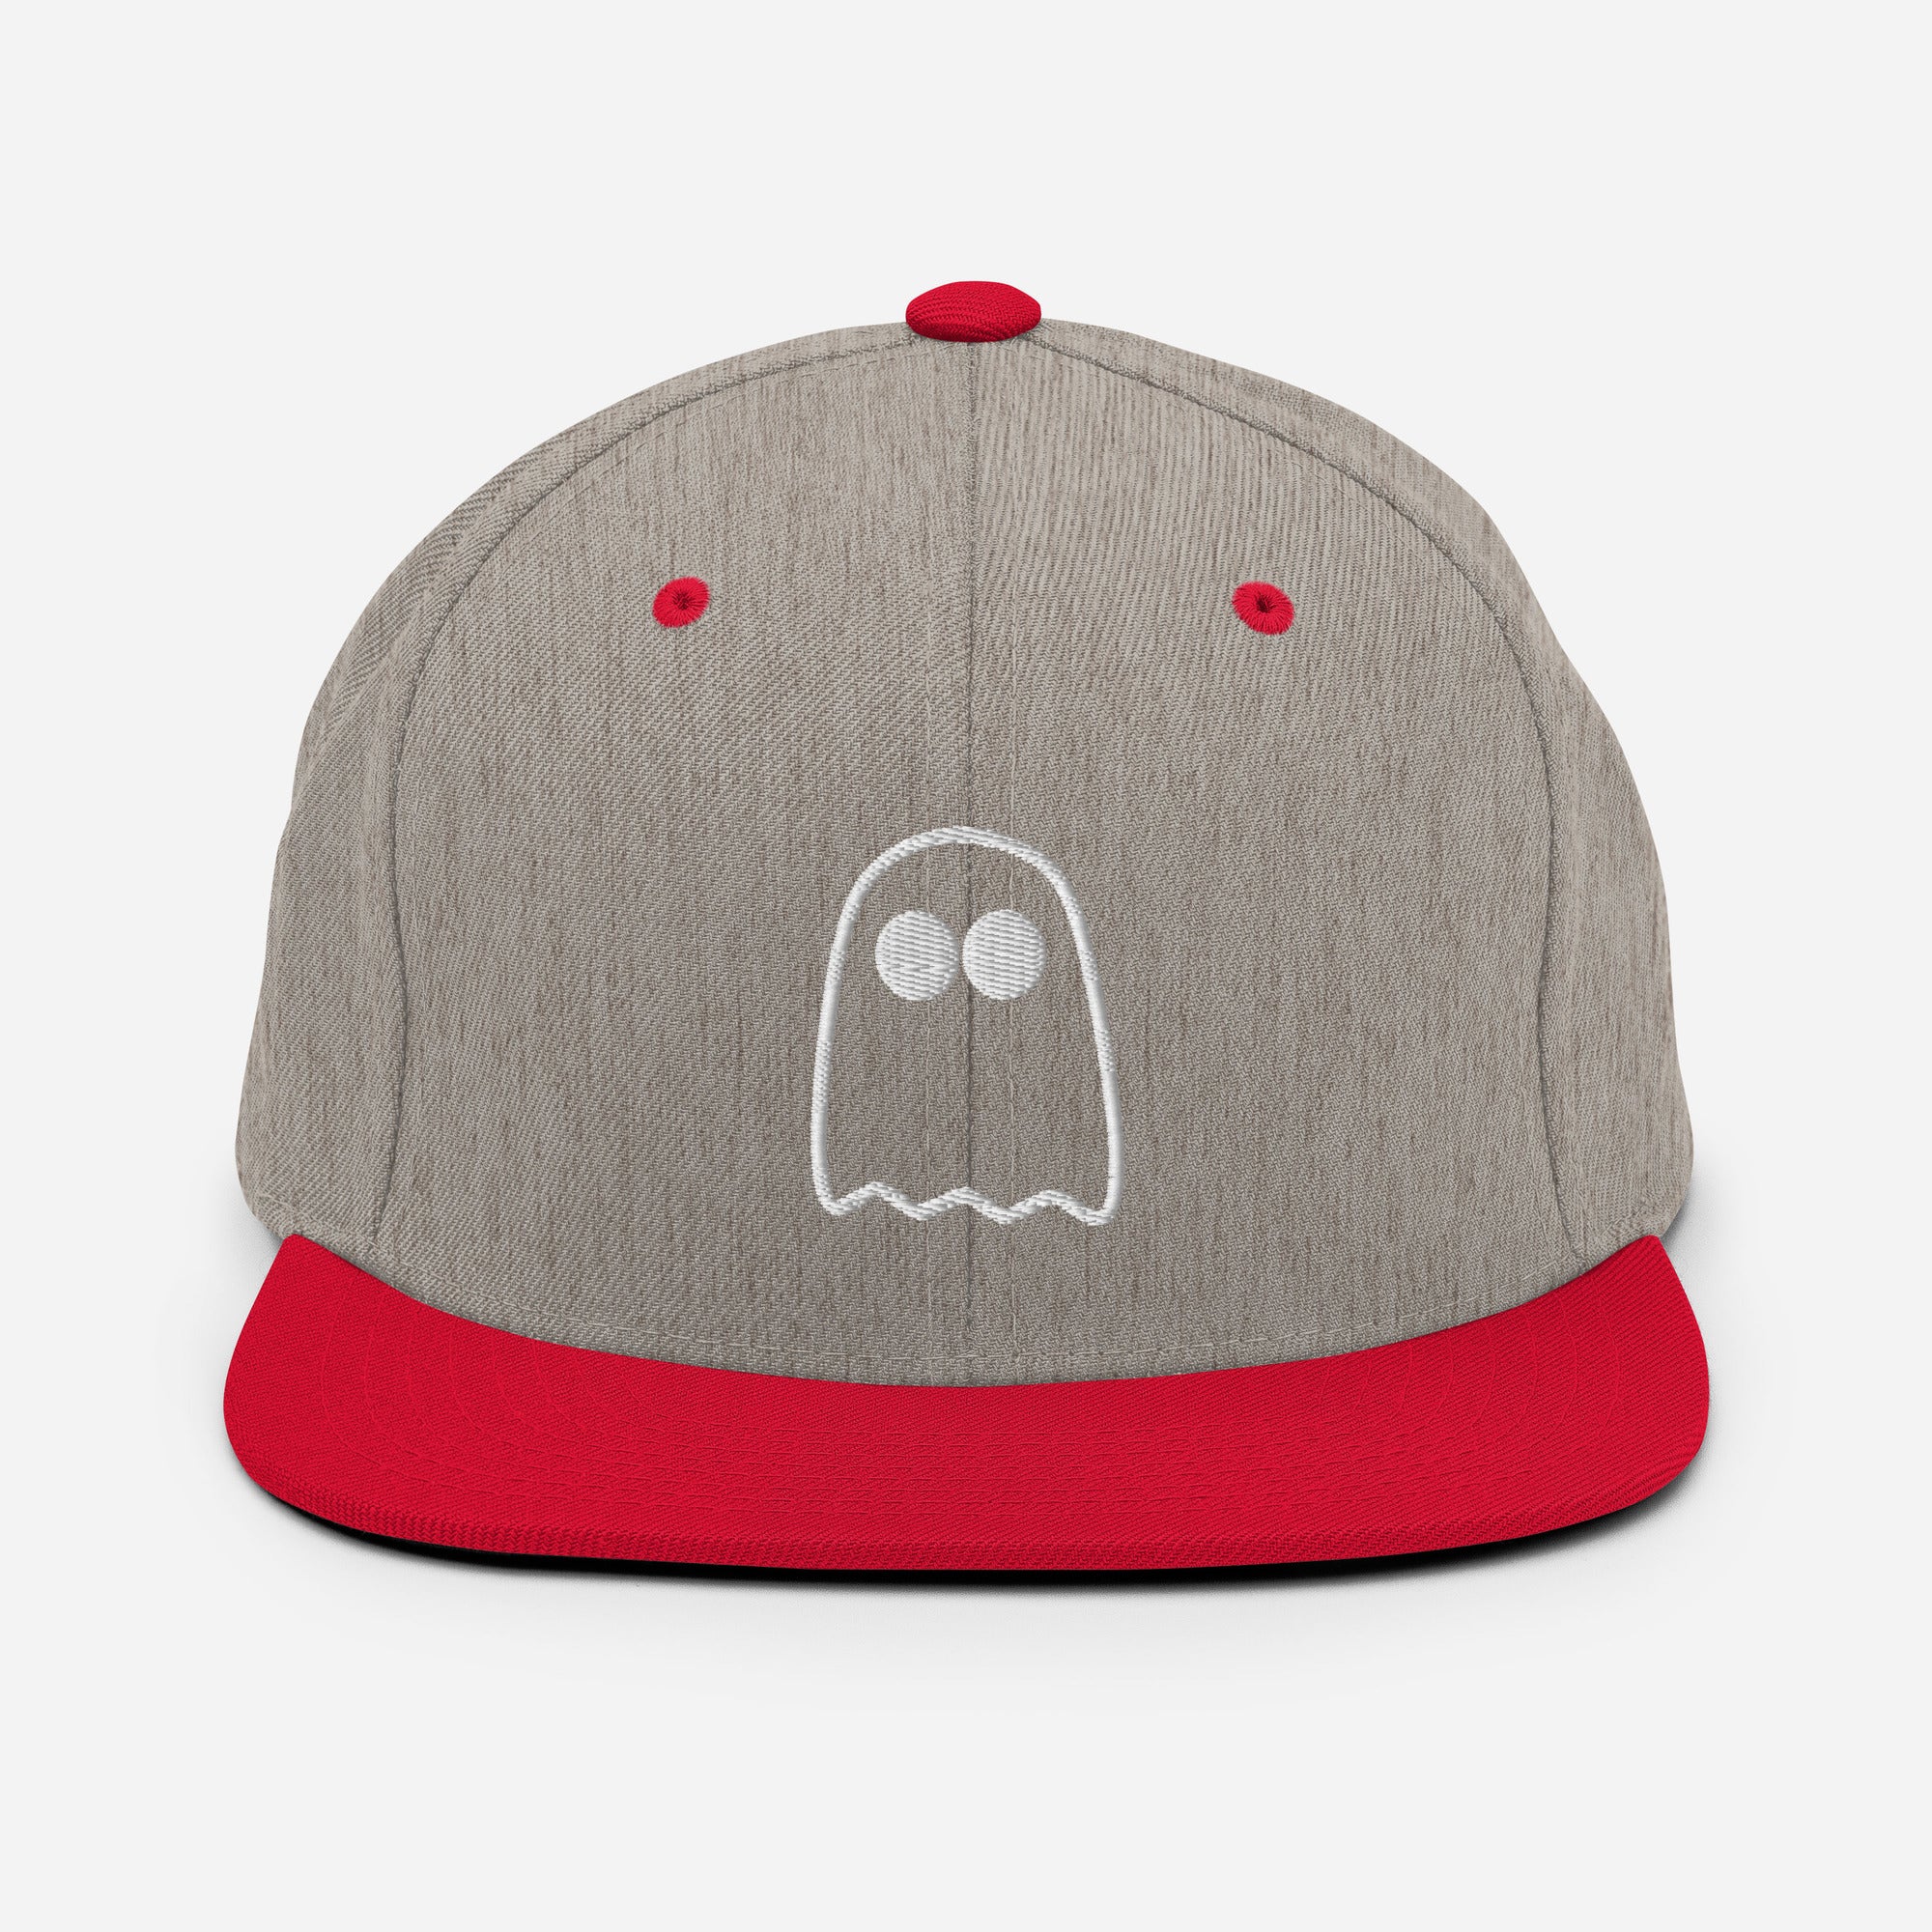 Ghost Snapback Hat